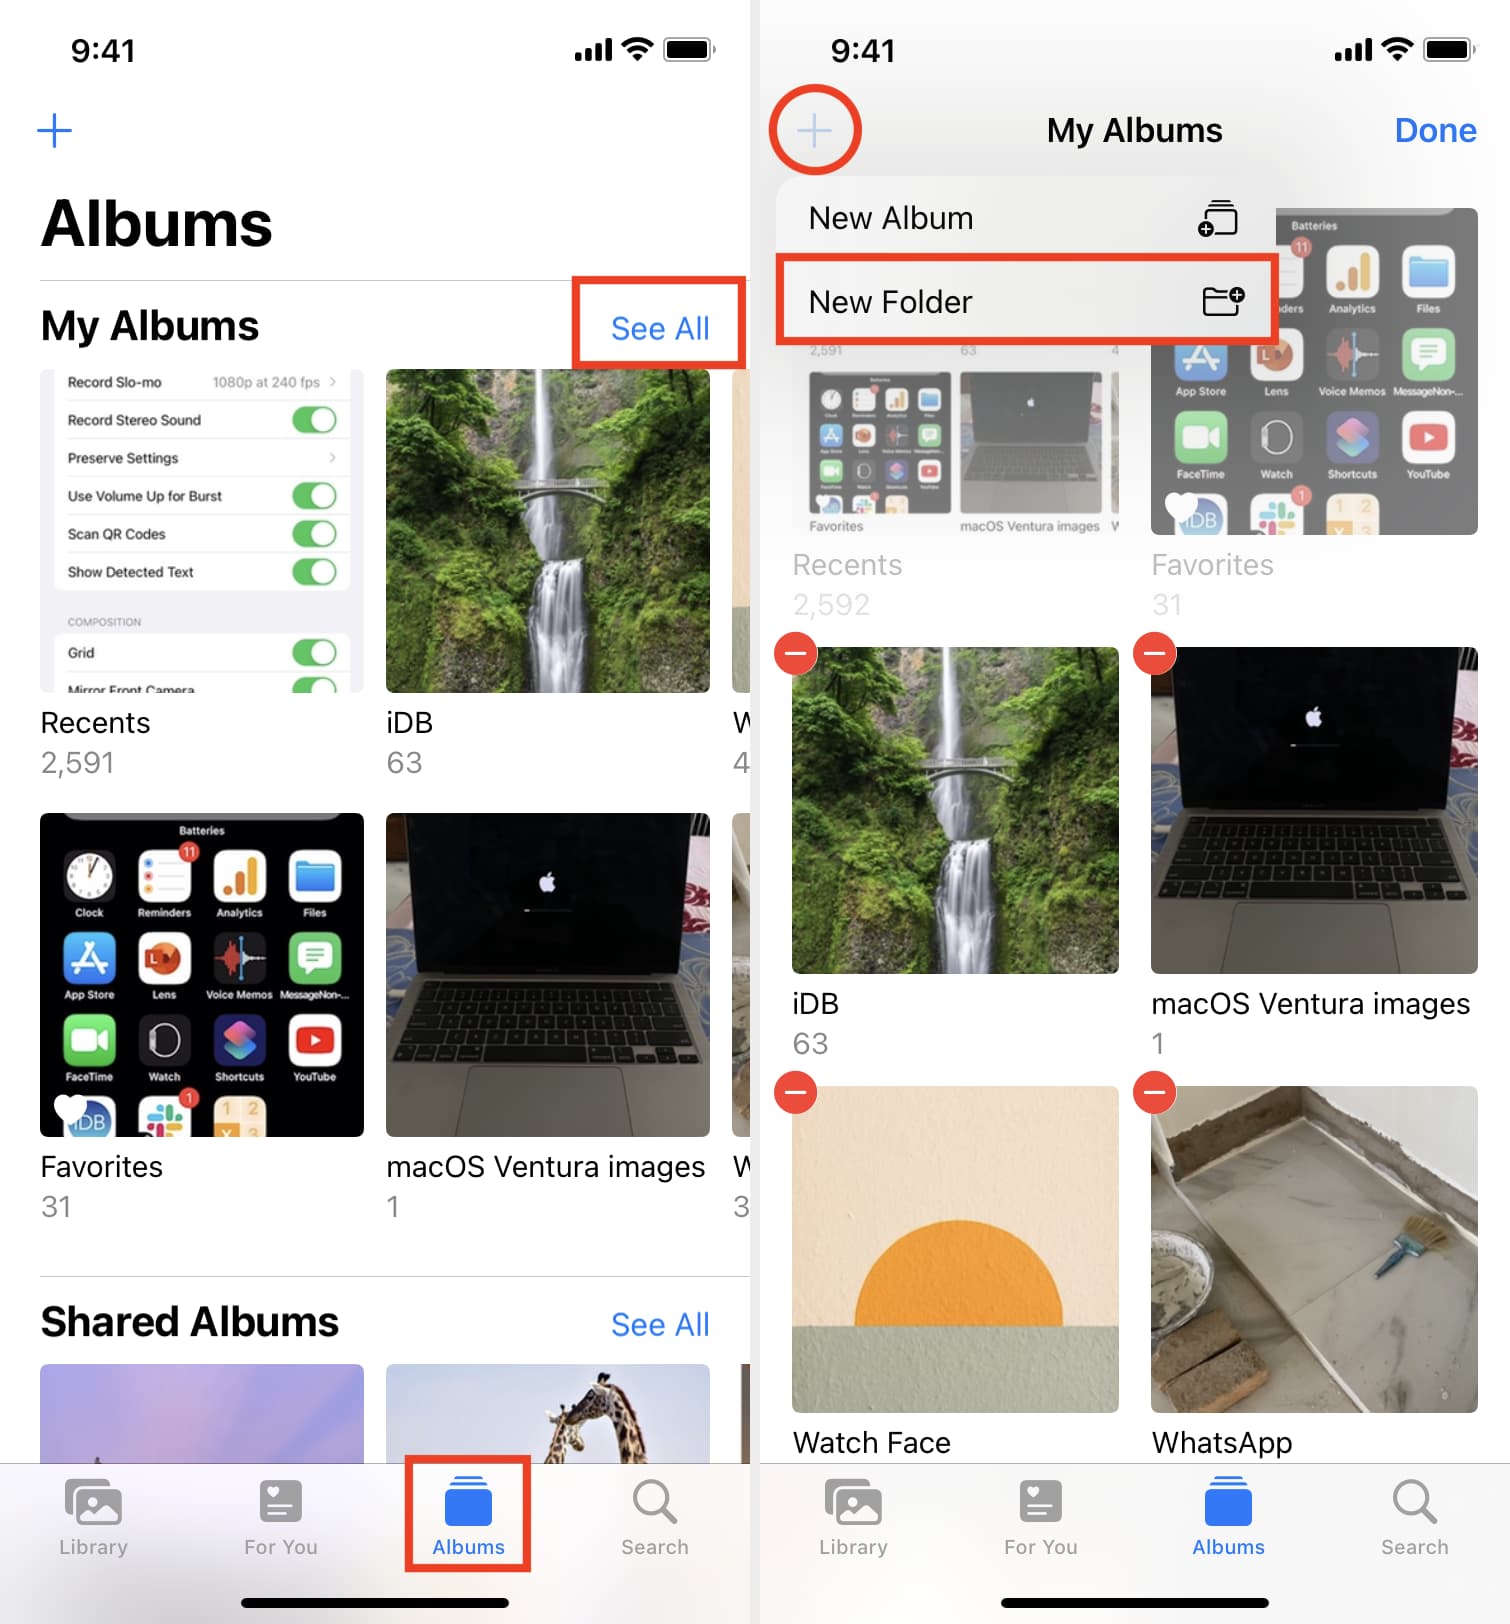 New Folder in iPhone Photos app